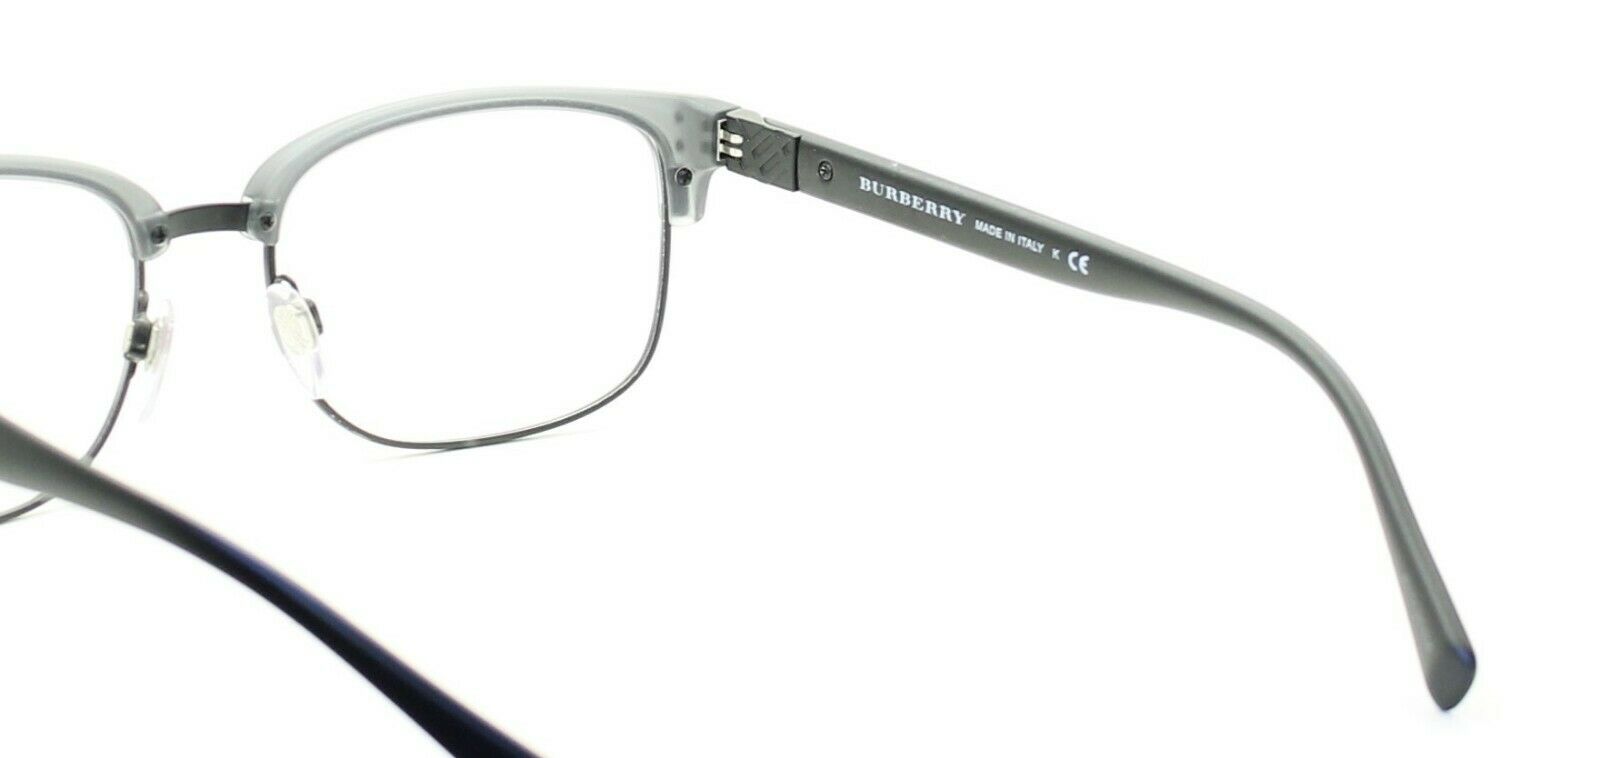 BURBERRY B 2253 3640 54mm Eyewear FRAMES RX Optical Glasses Eyeglasses  Italy New - GGV Eyewear